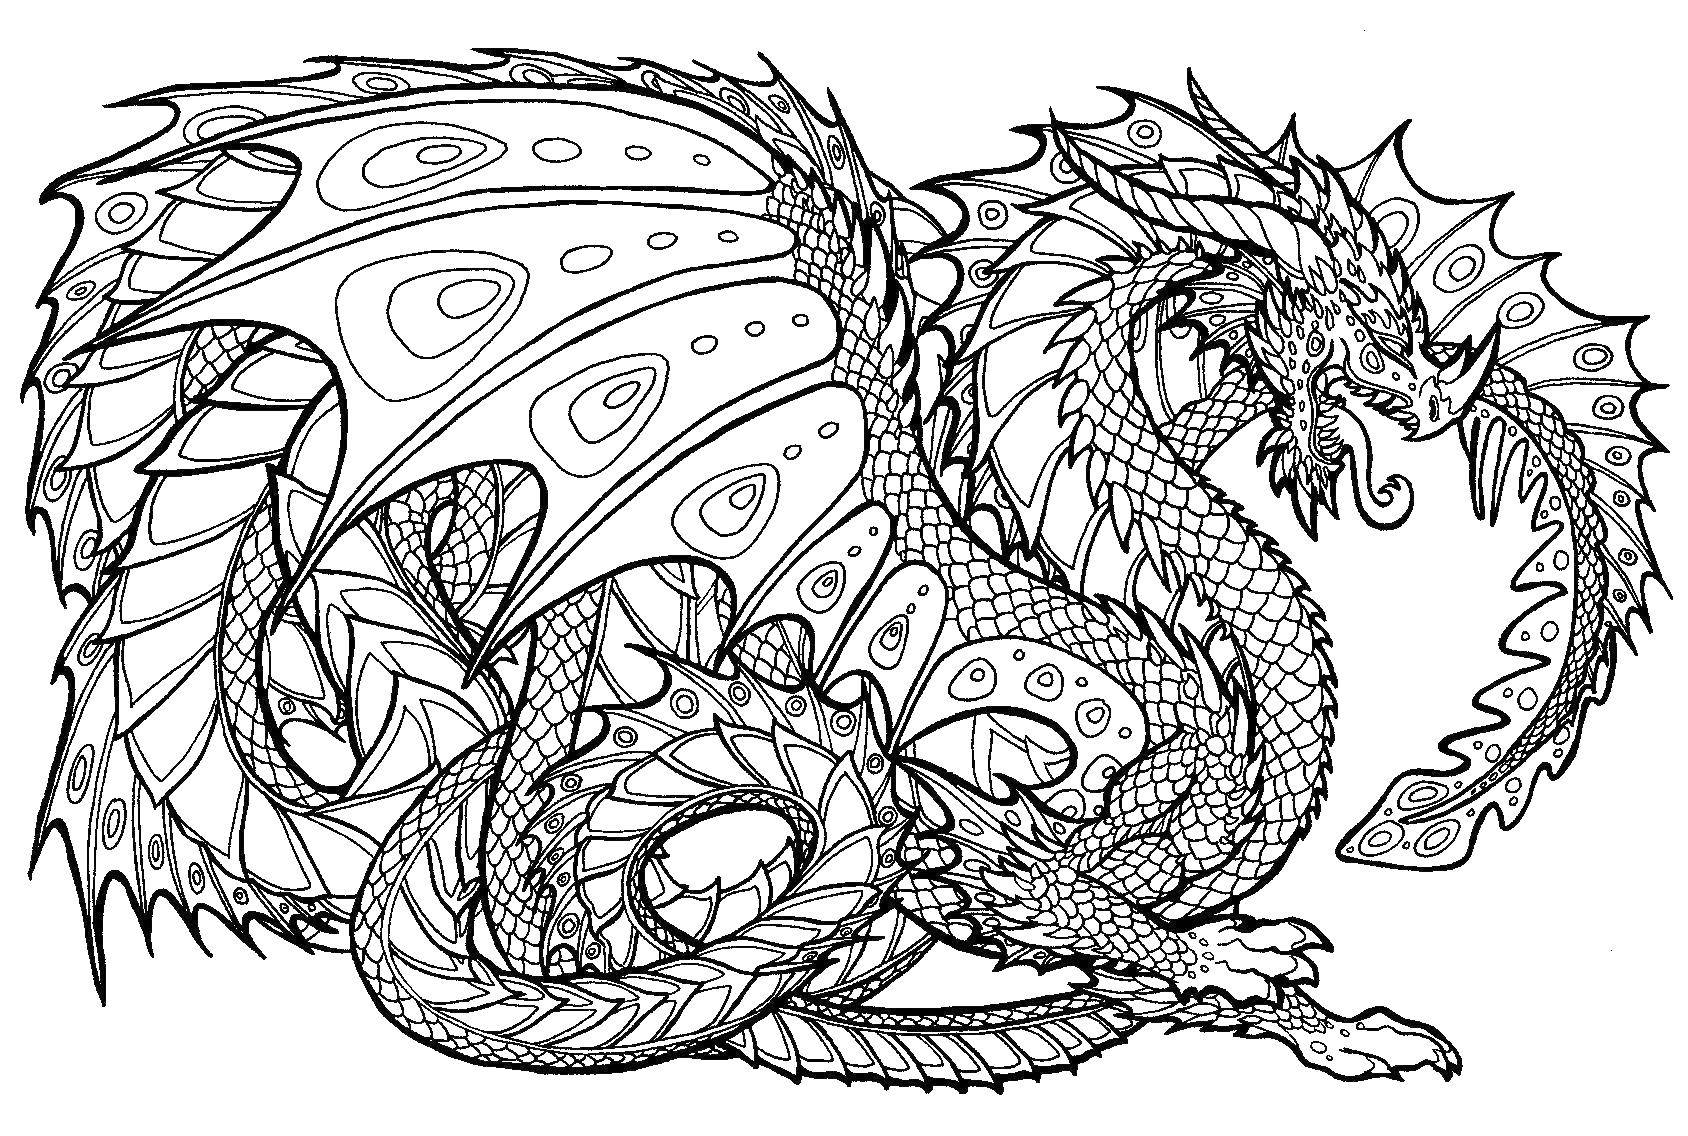 Coloring Beautiful dragon. Category Dragons. Tags:  Dragons.